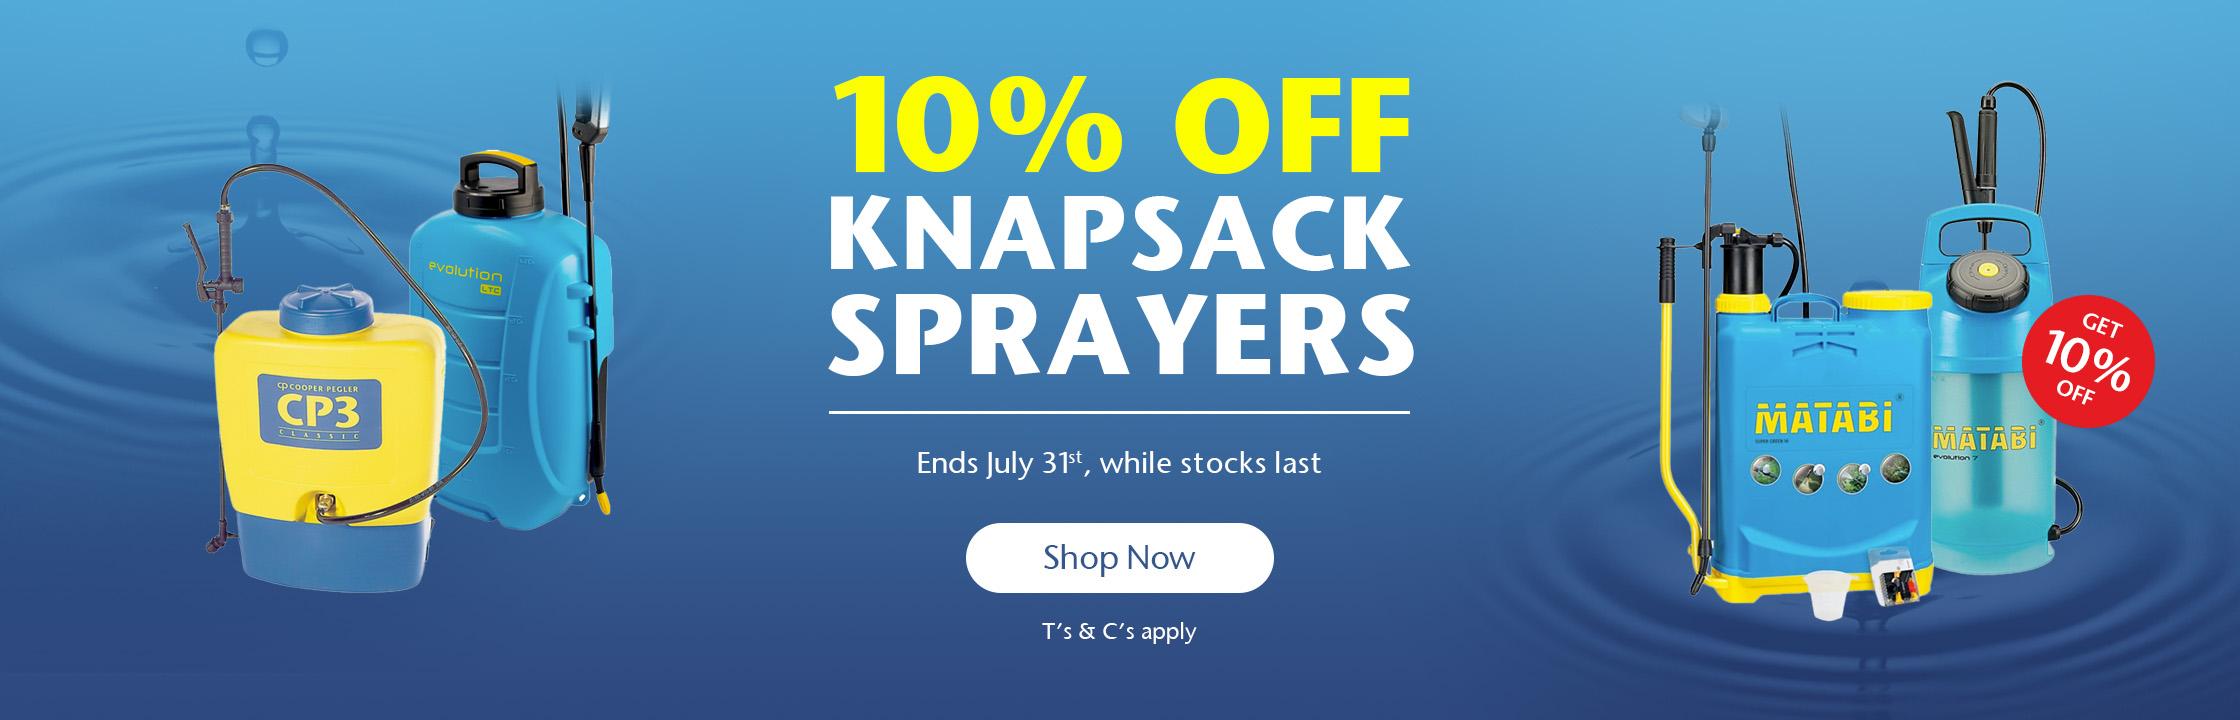 10% OFF Knapsack Sprayers